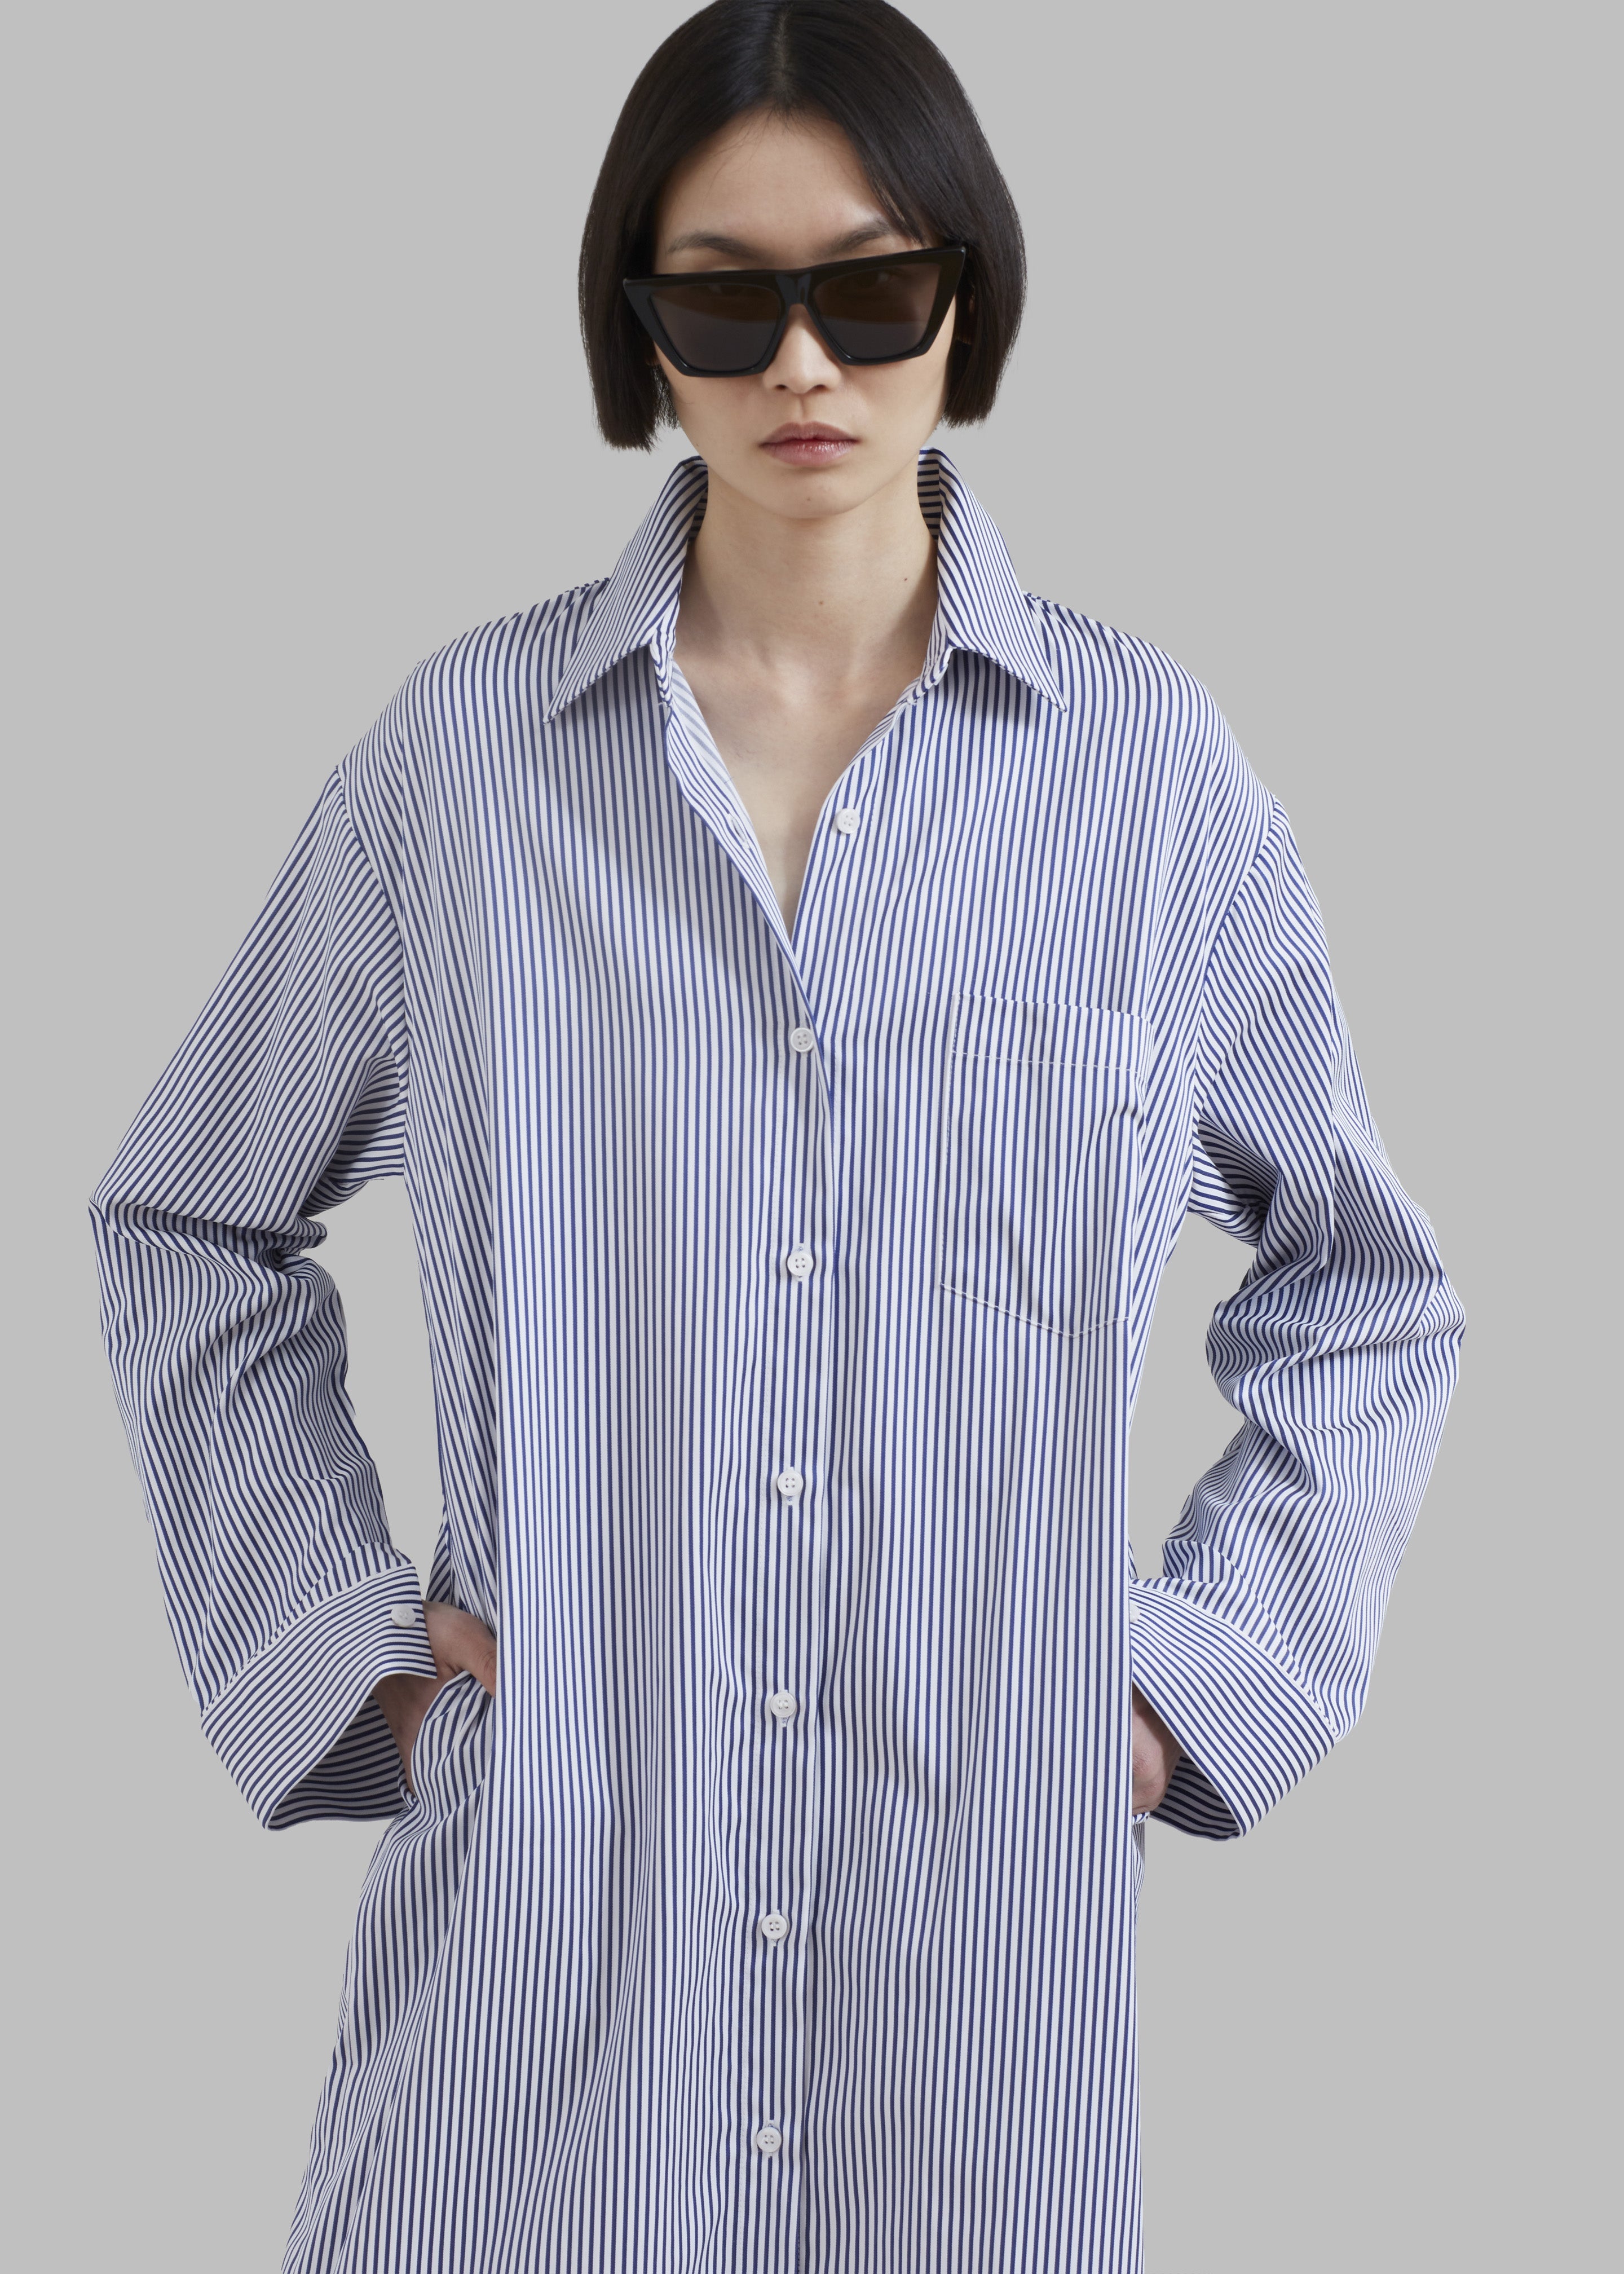 Cala Shirt Dress - Navy Stripe - 7